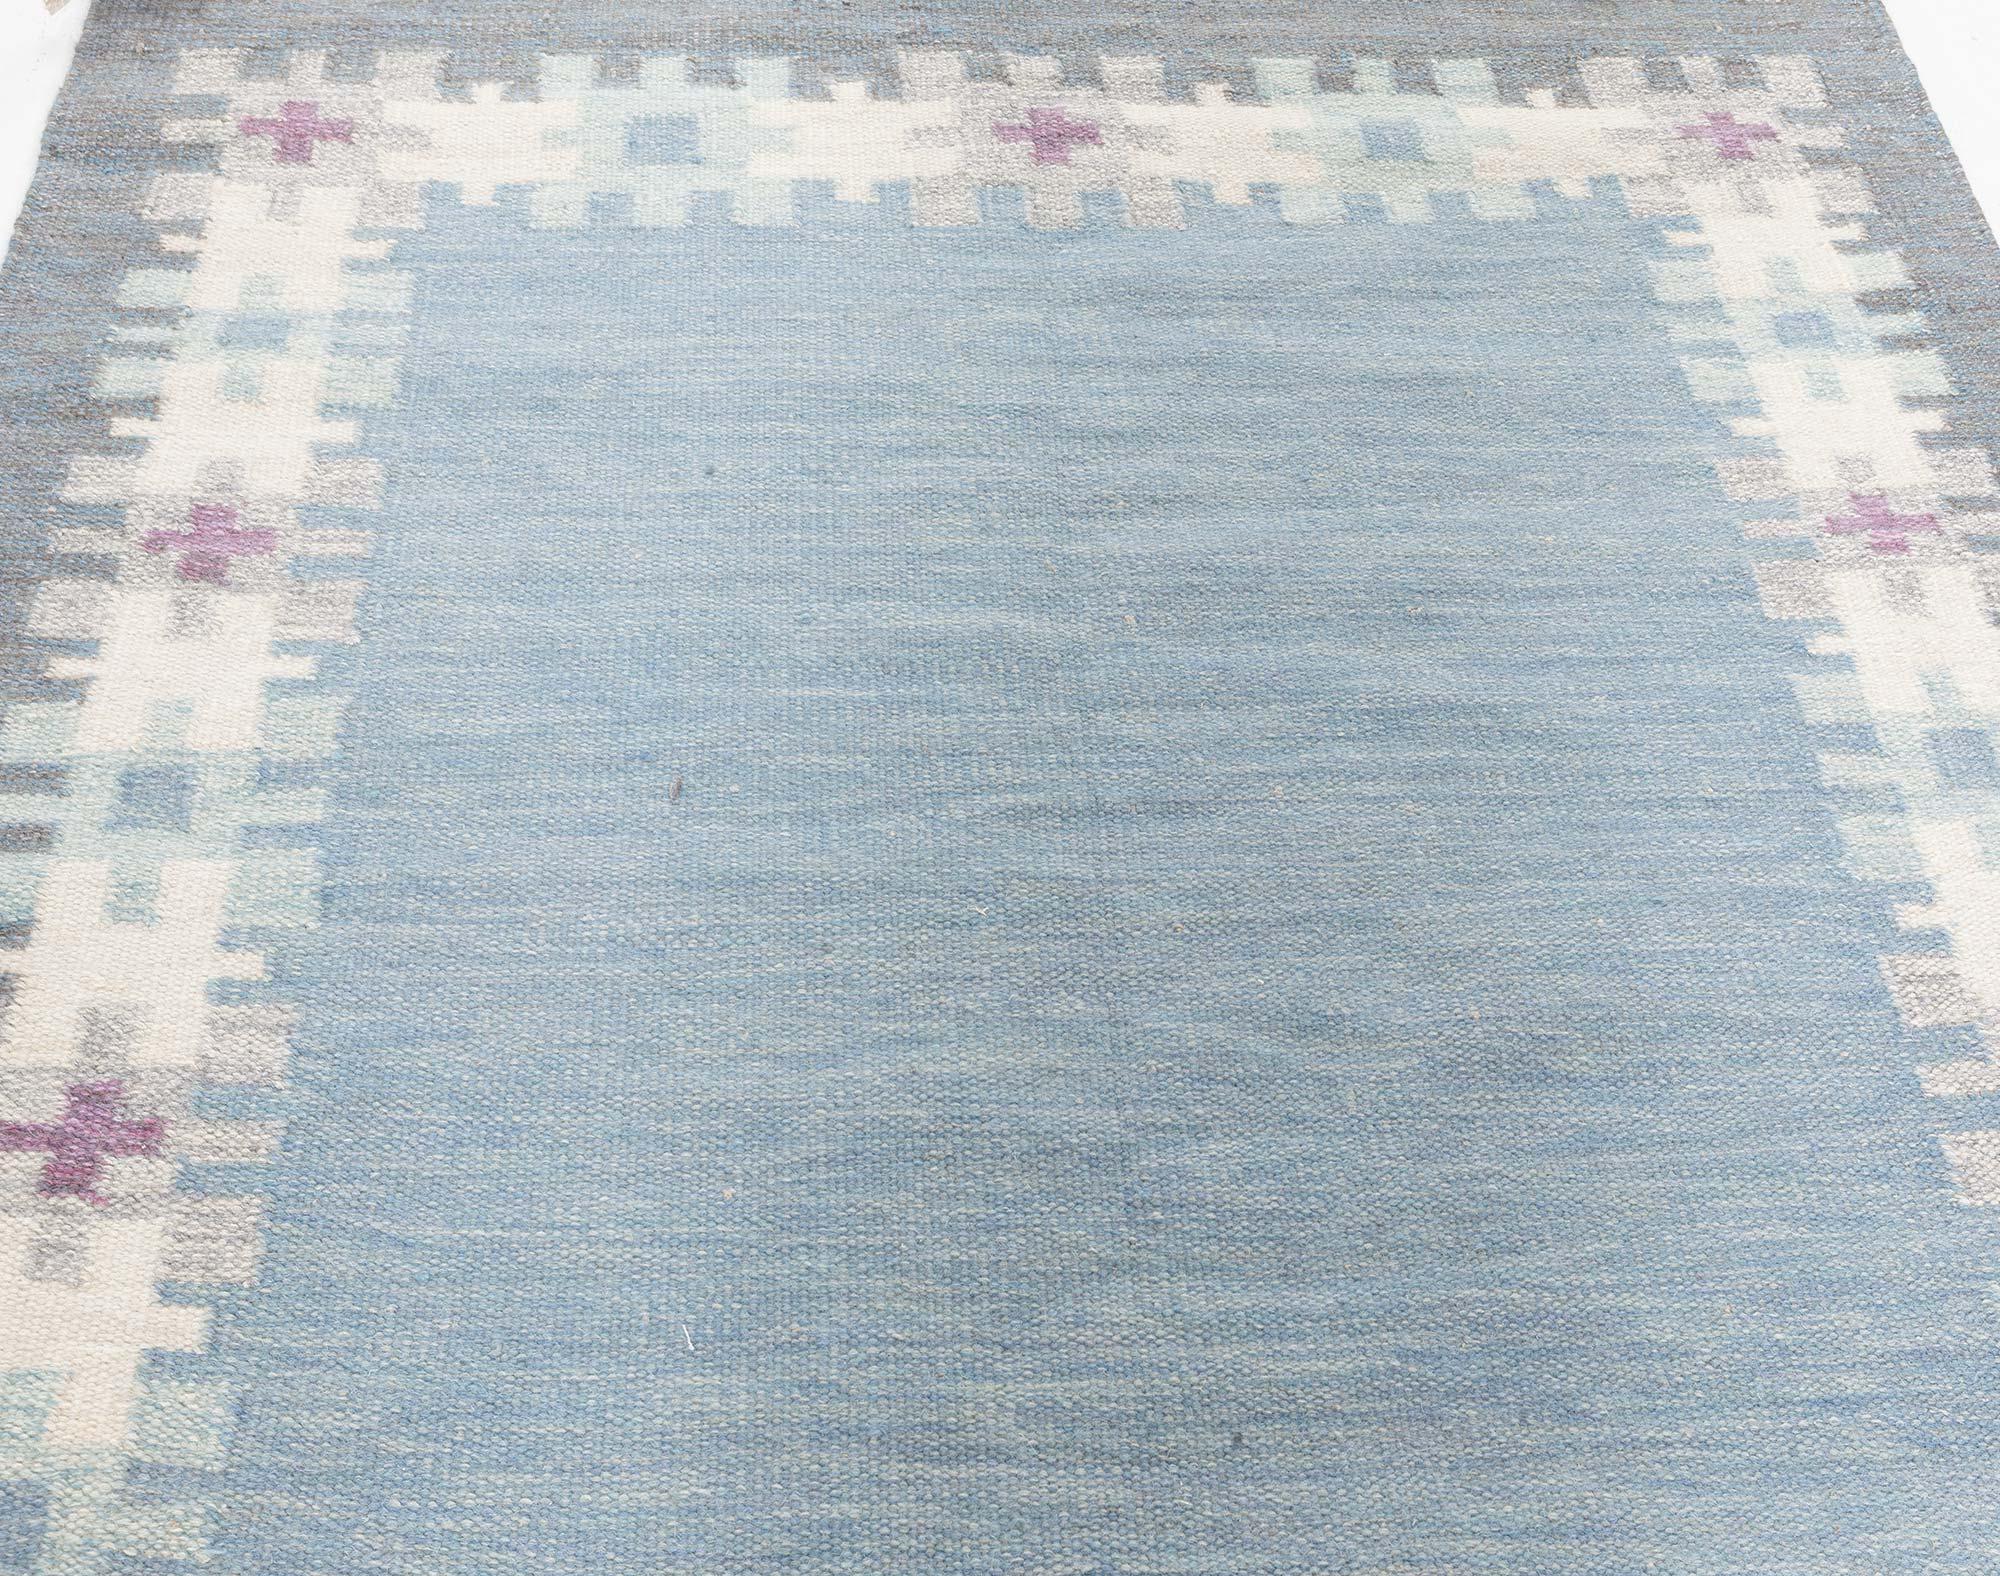 New Swedish Inspired Flat Weave Rug by Doris Leslie Blau
Size: 4'7